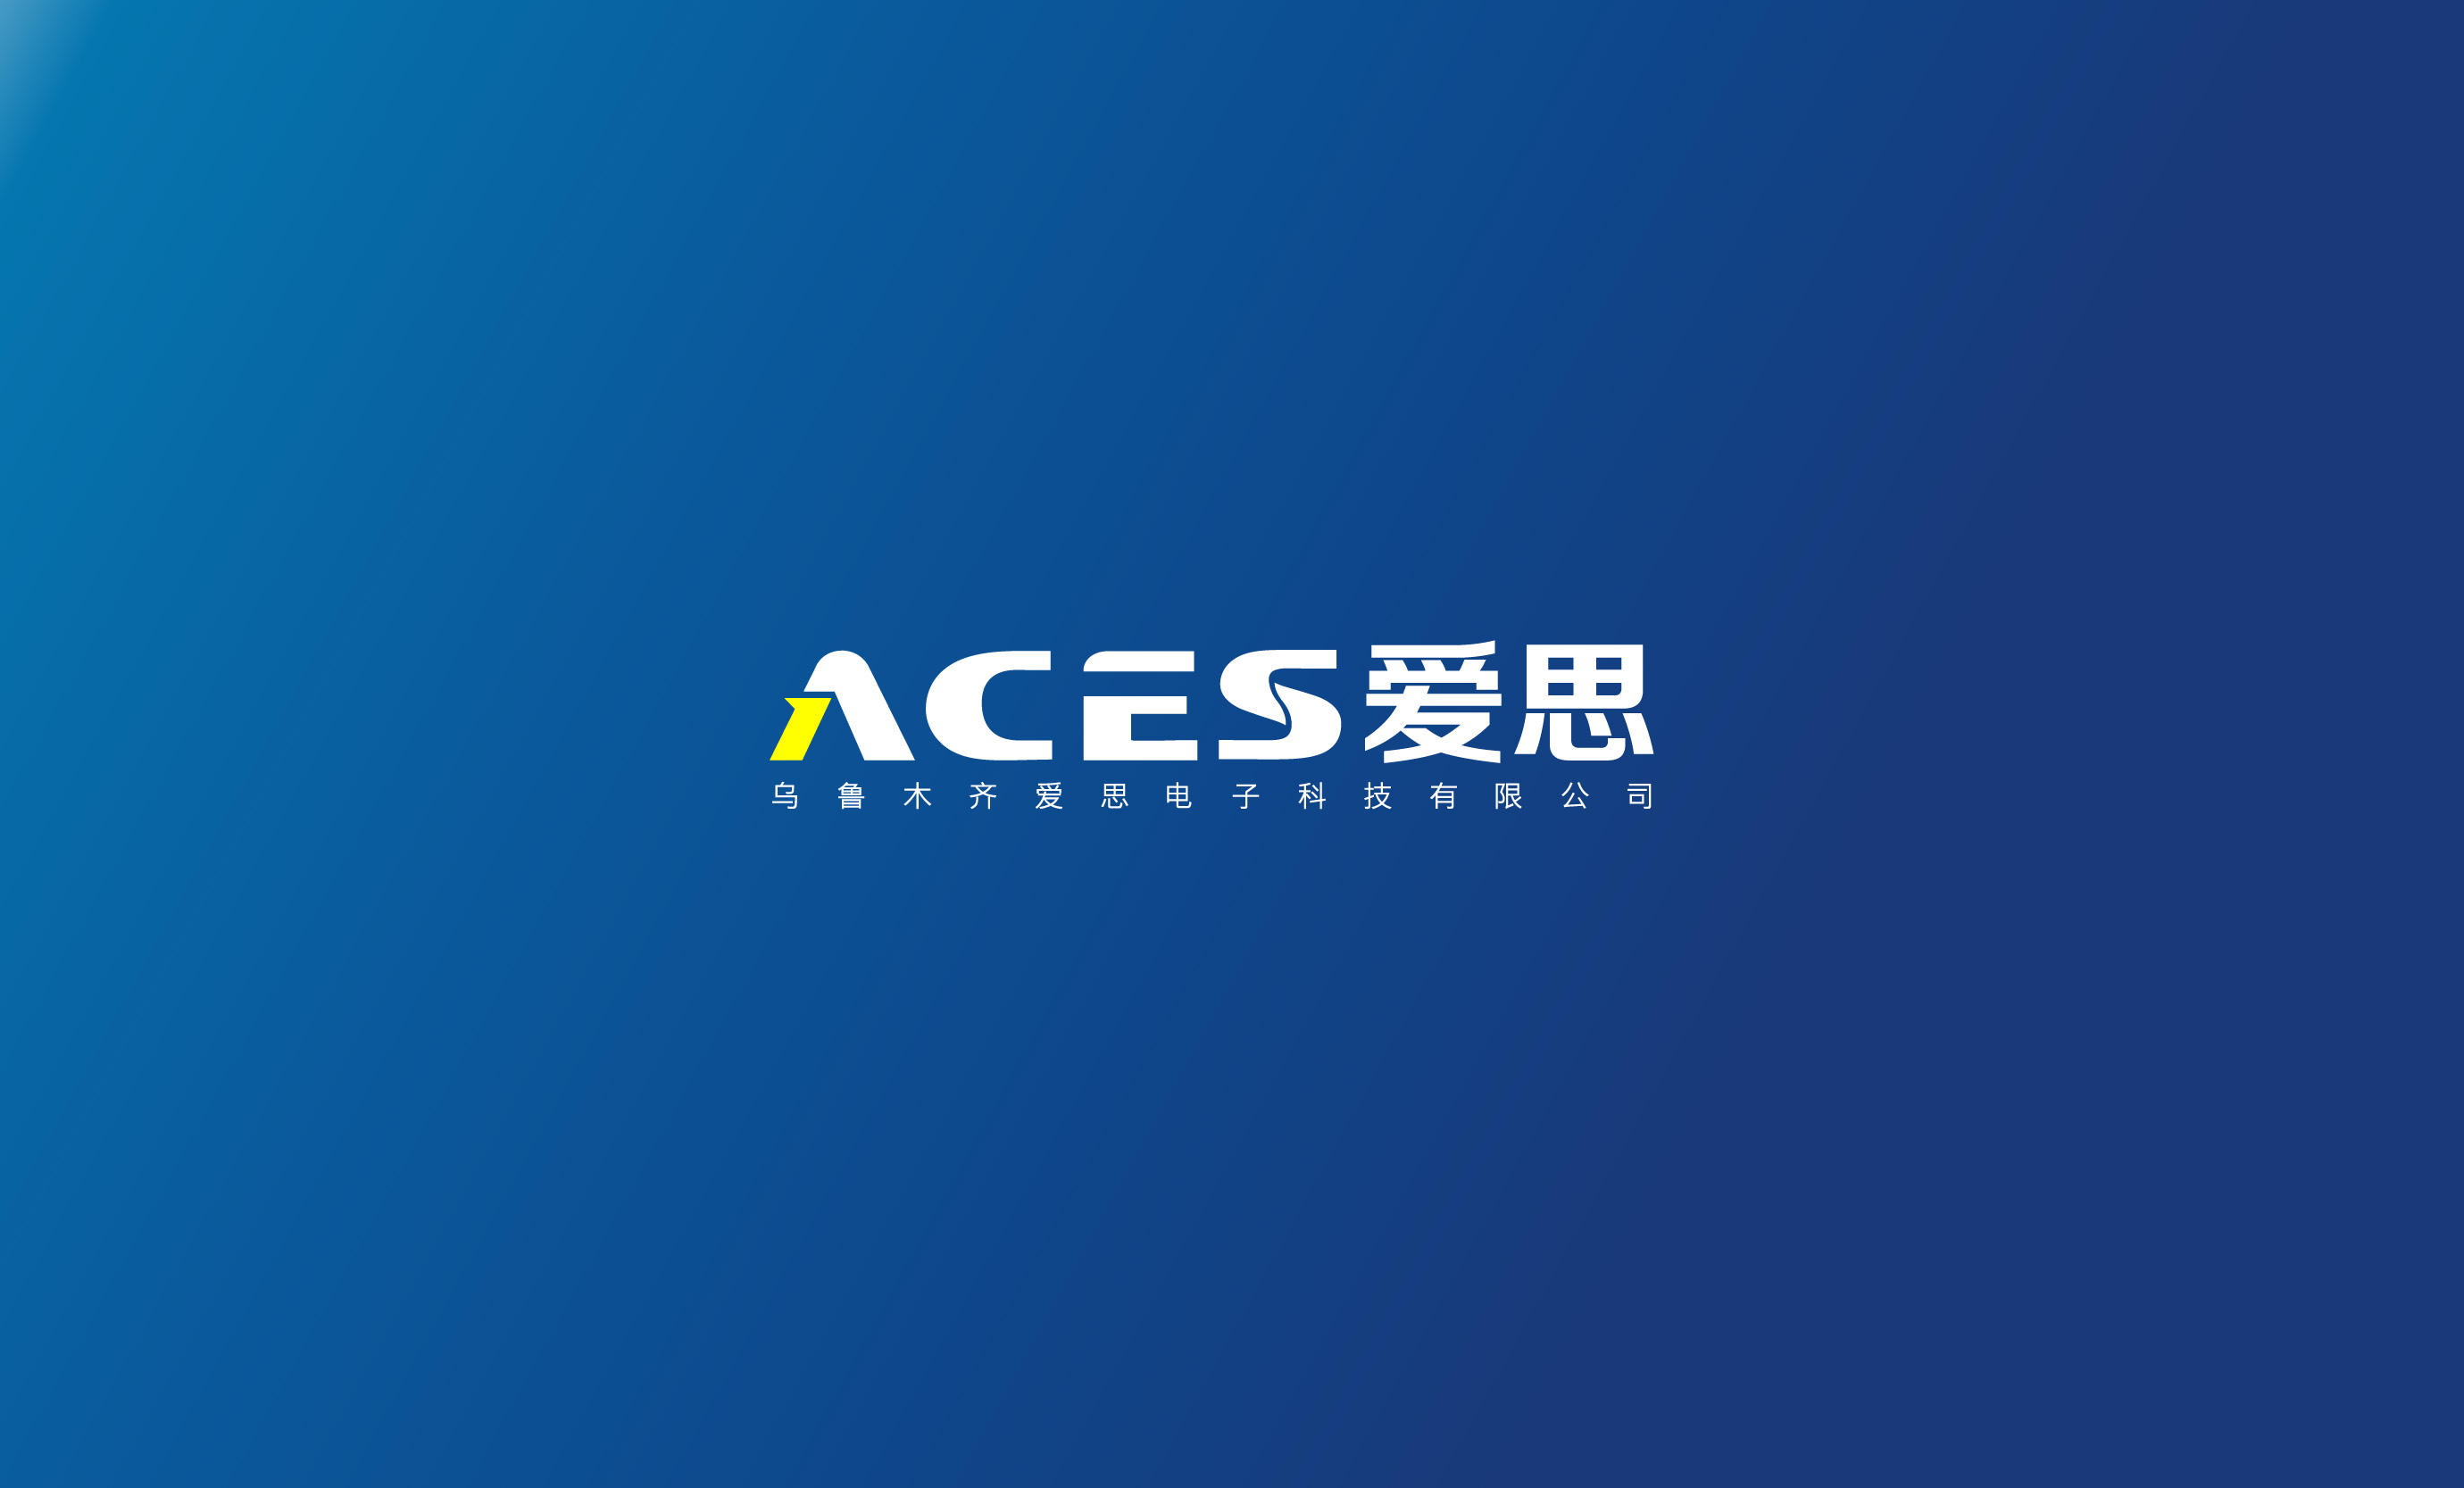 Aces_software